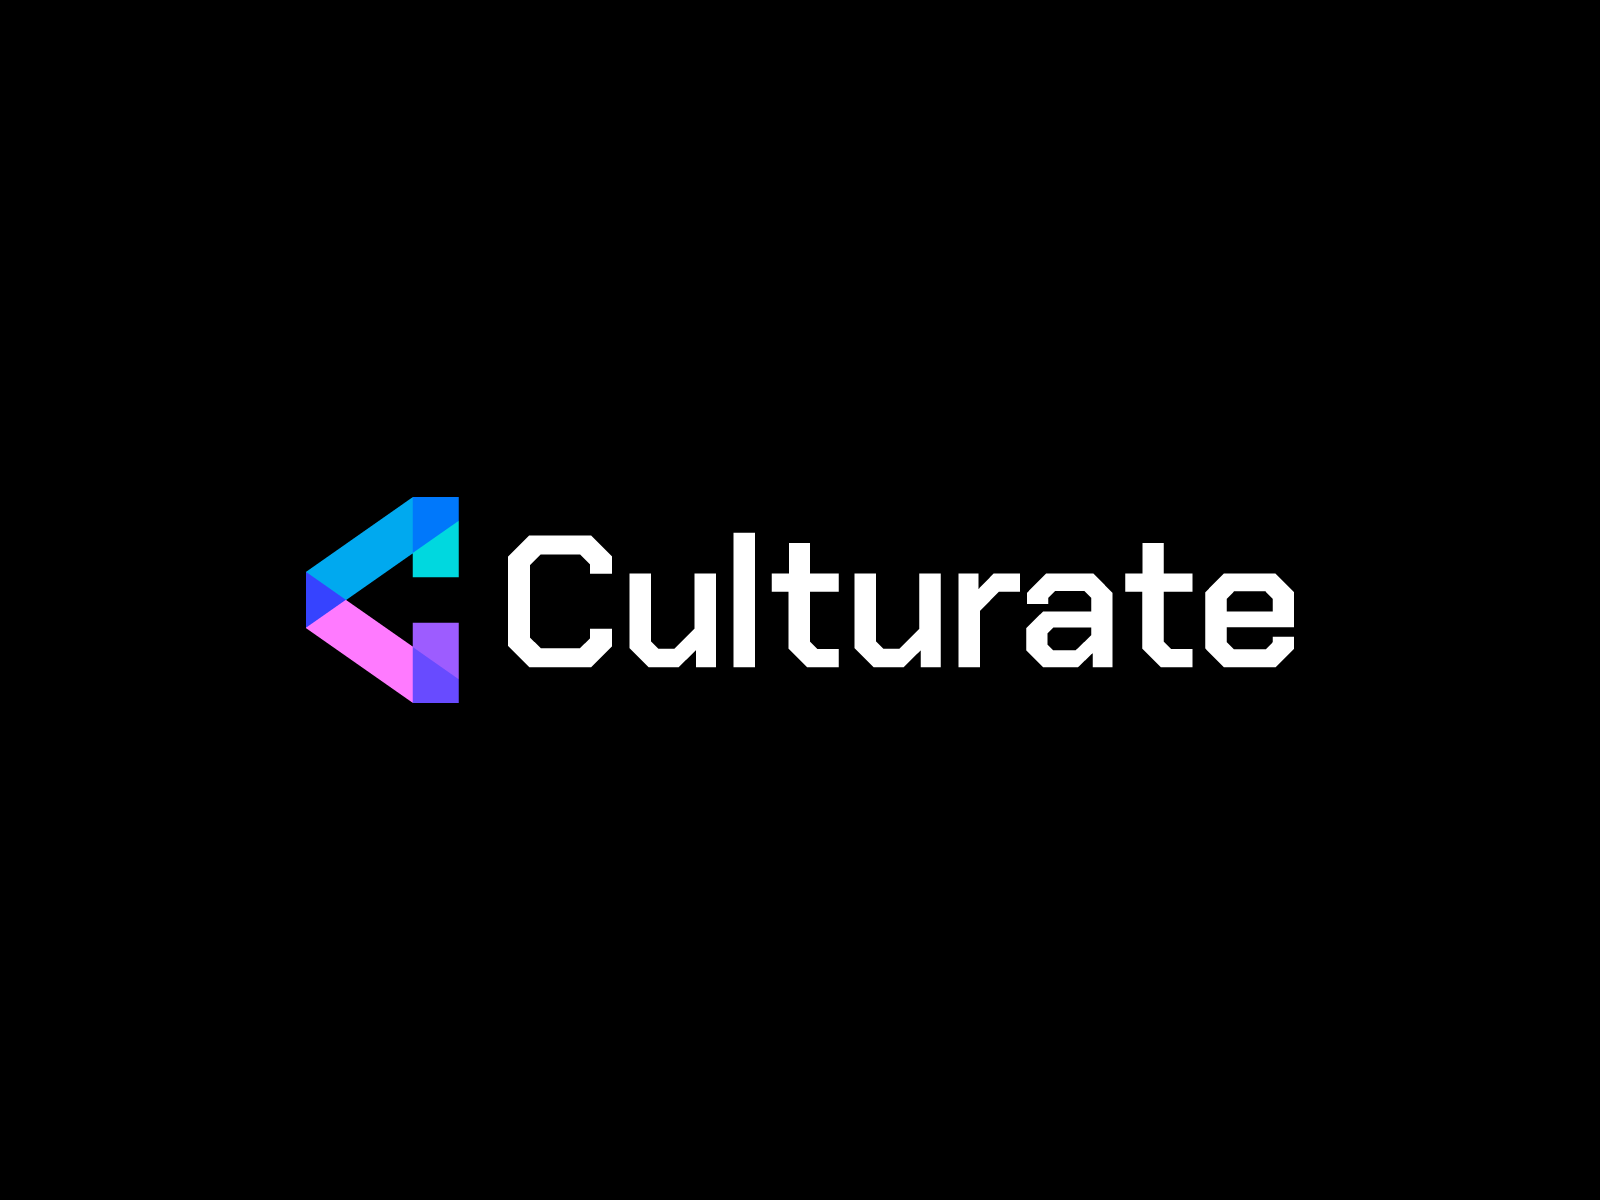 Culturate Logo Design by Elif Kameşoğlu on Dribbble